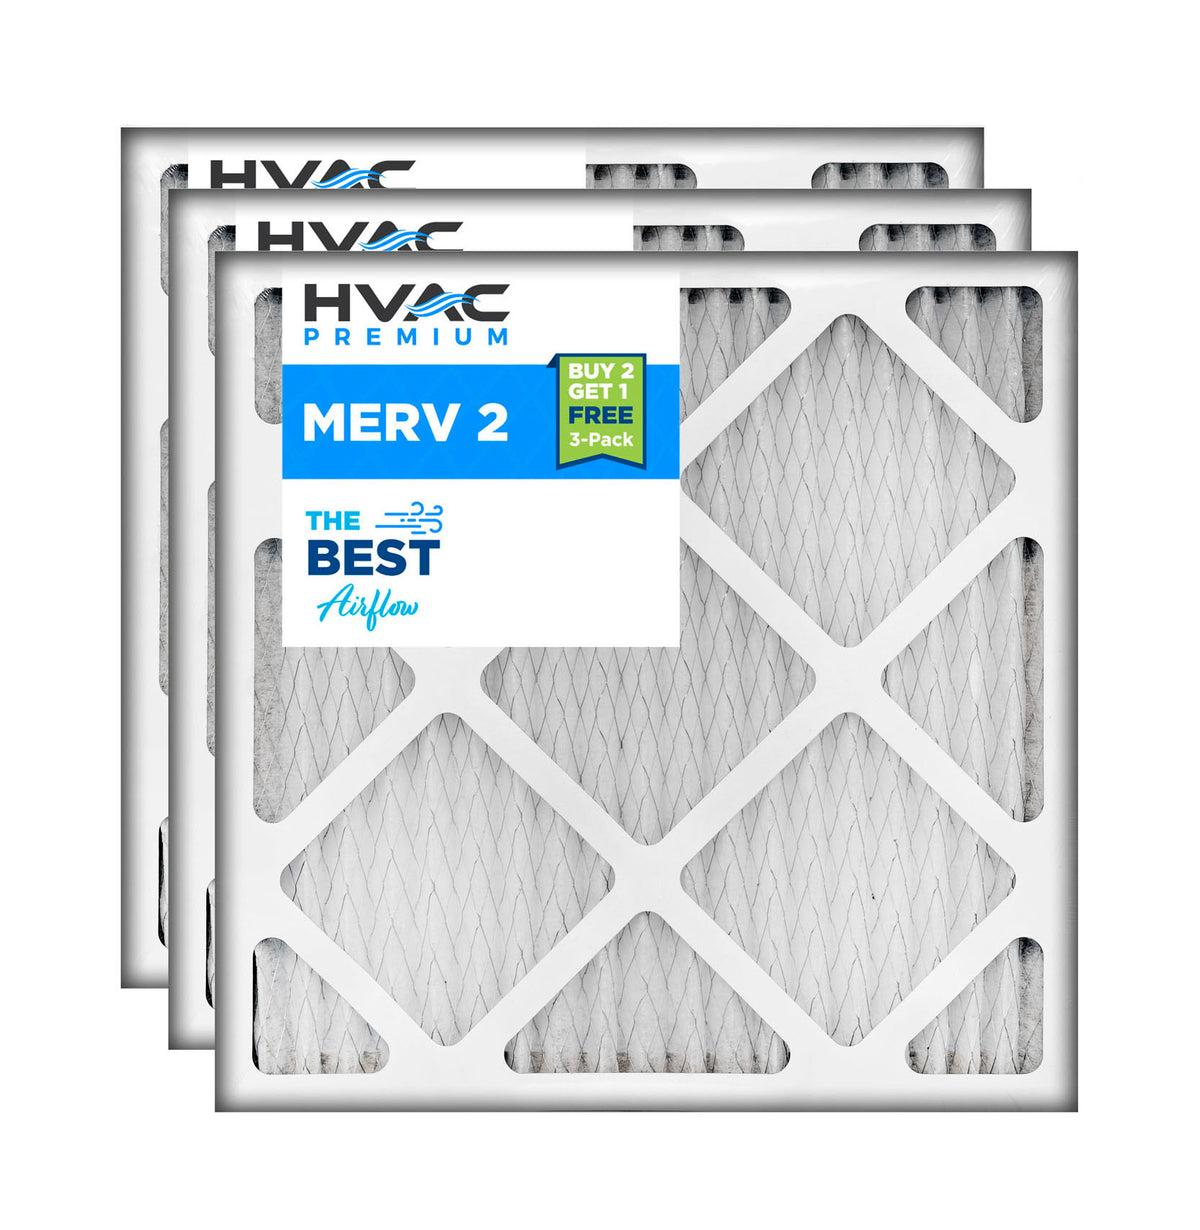 20 x 10 Merv 2 HVAC Pleated Filter, 12-Pack